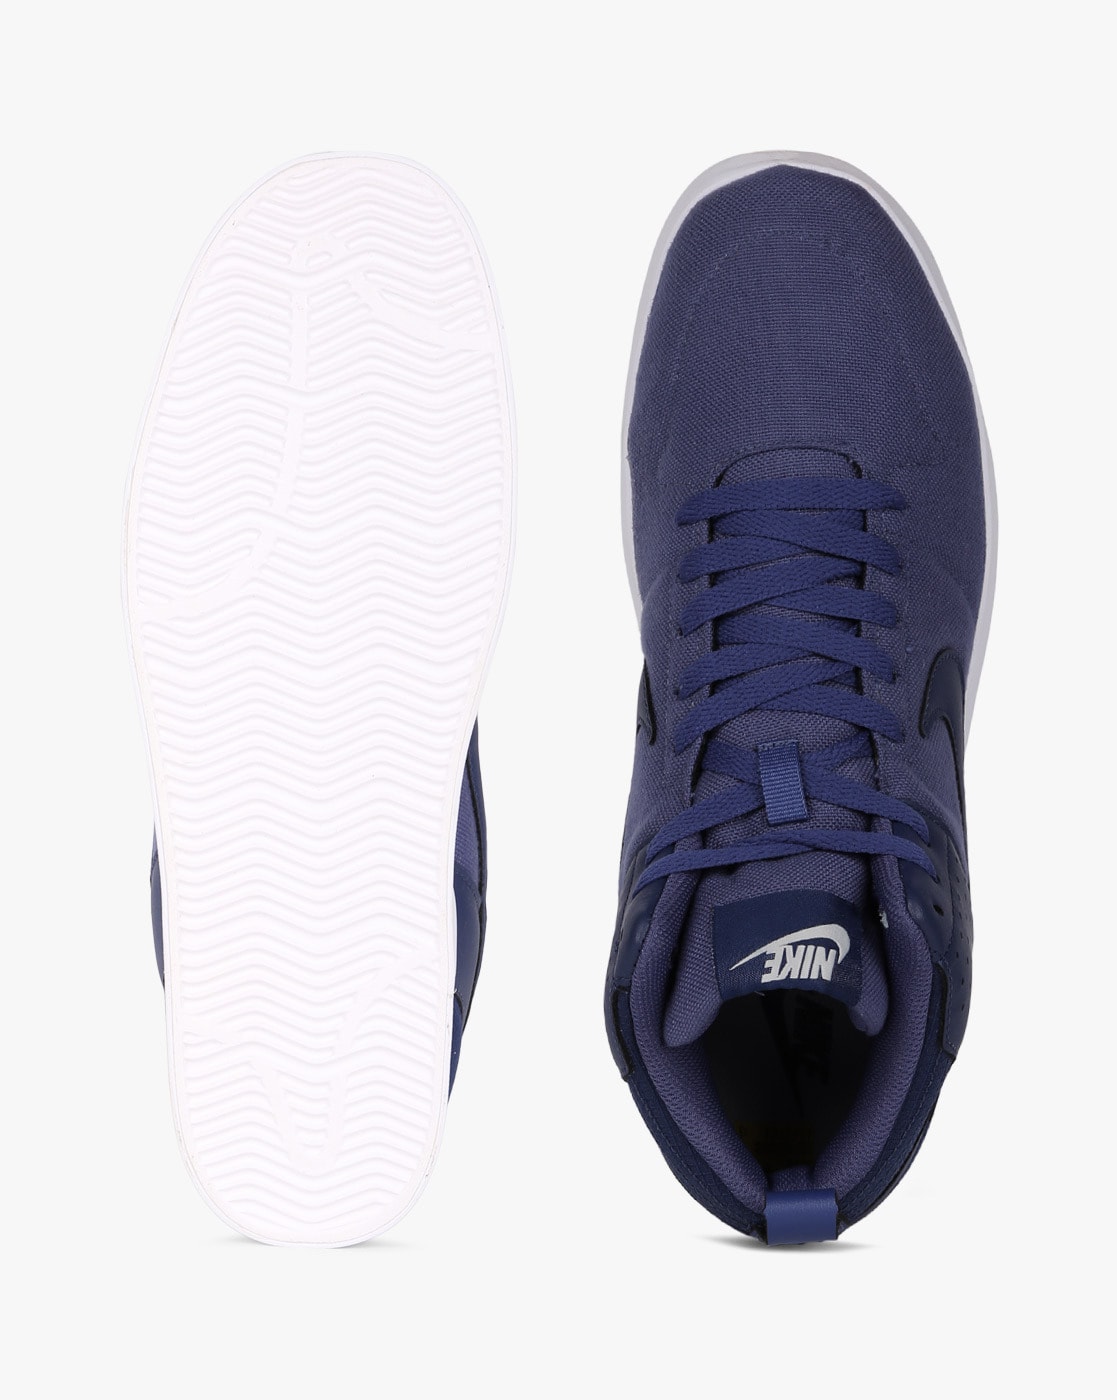 Nike Men's Liteforce III MID Grey Sneakers for Men - Buy Nike Men's Sport  Shoes at 30% off. |Paytm Mall